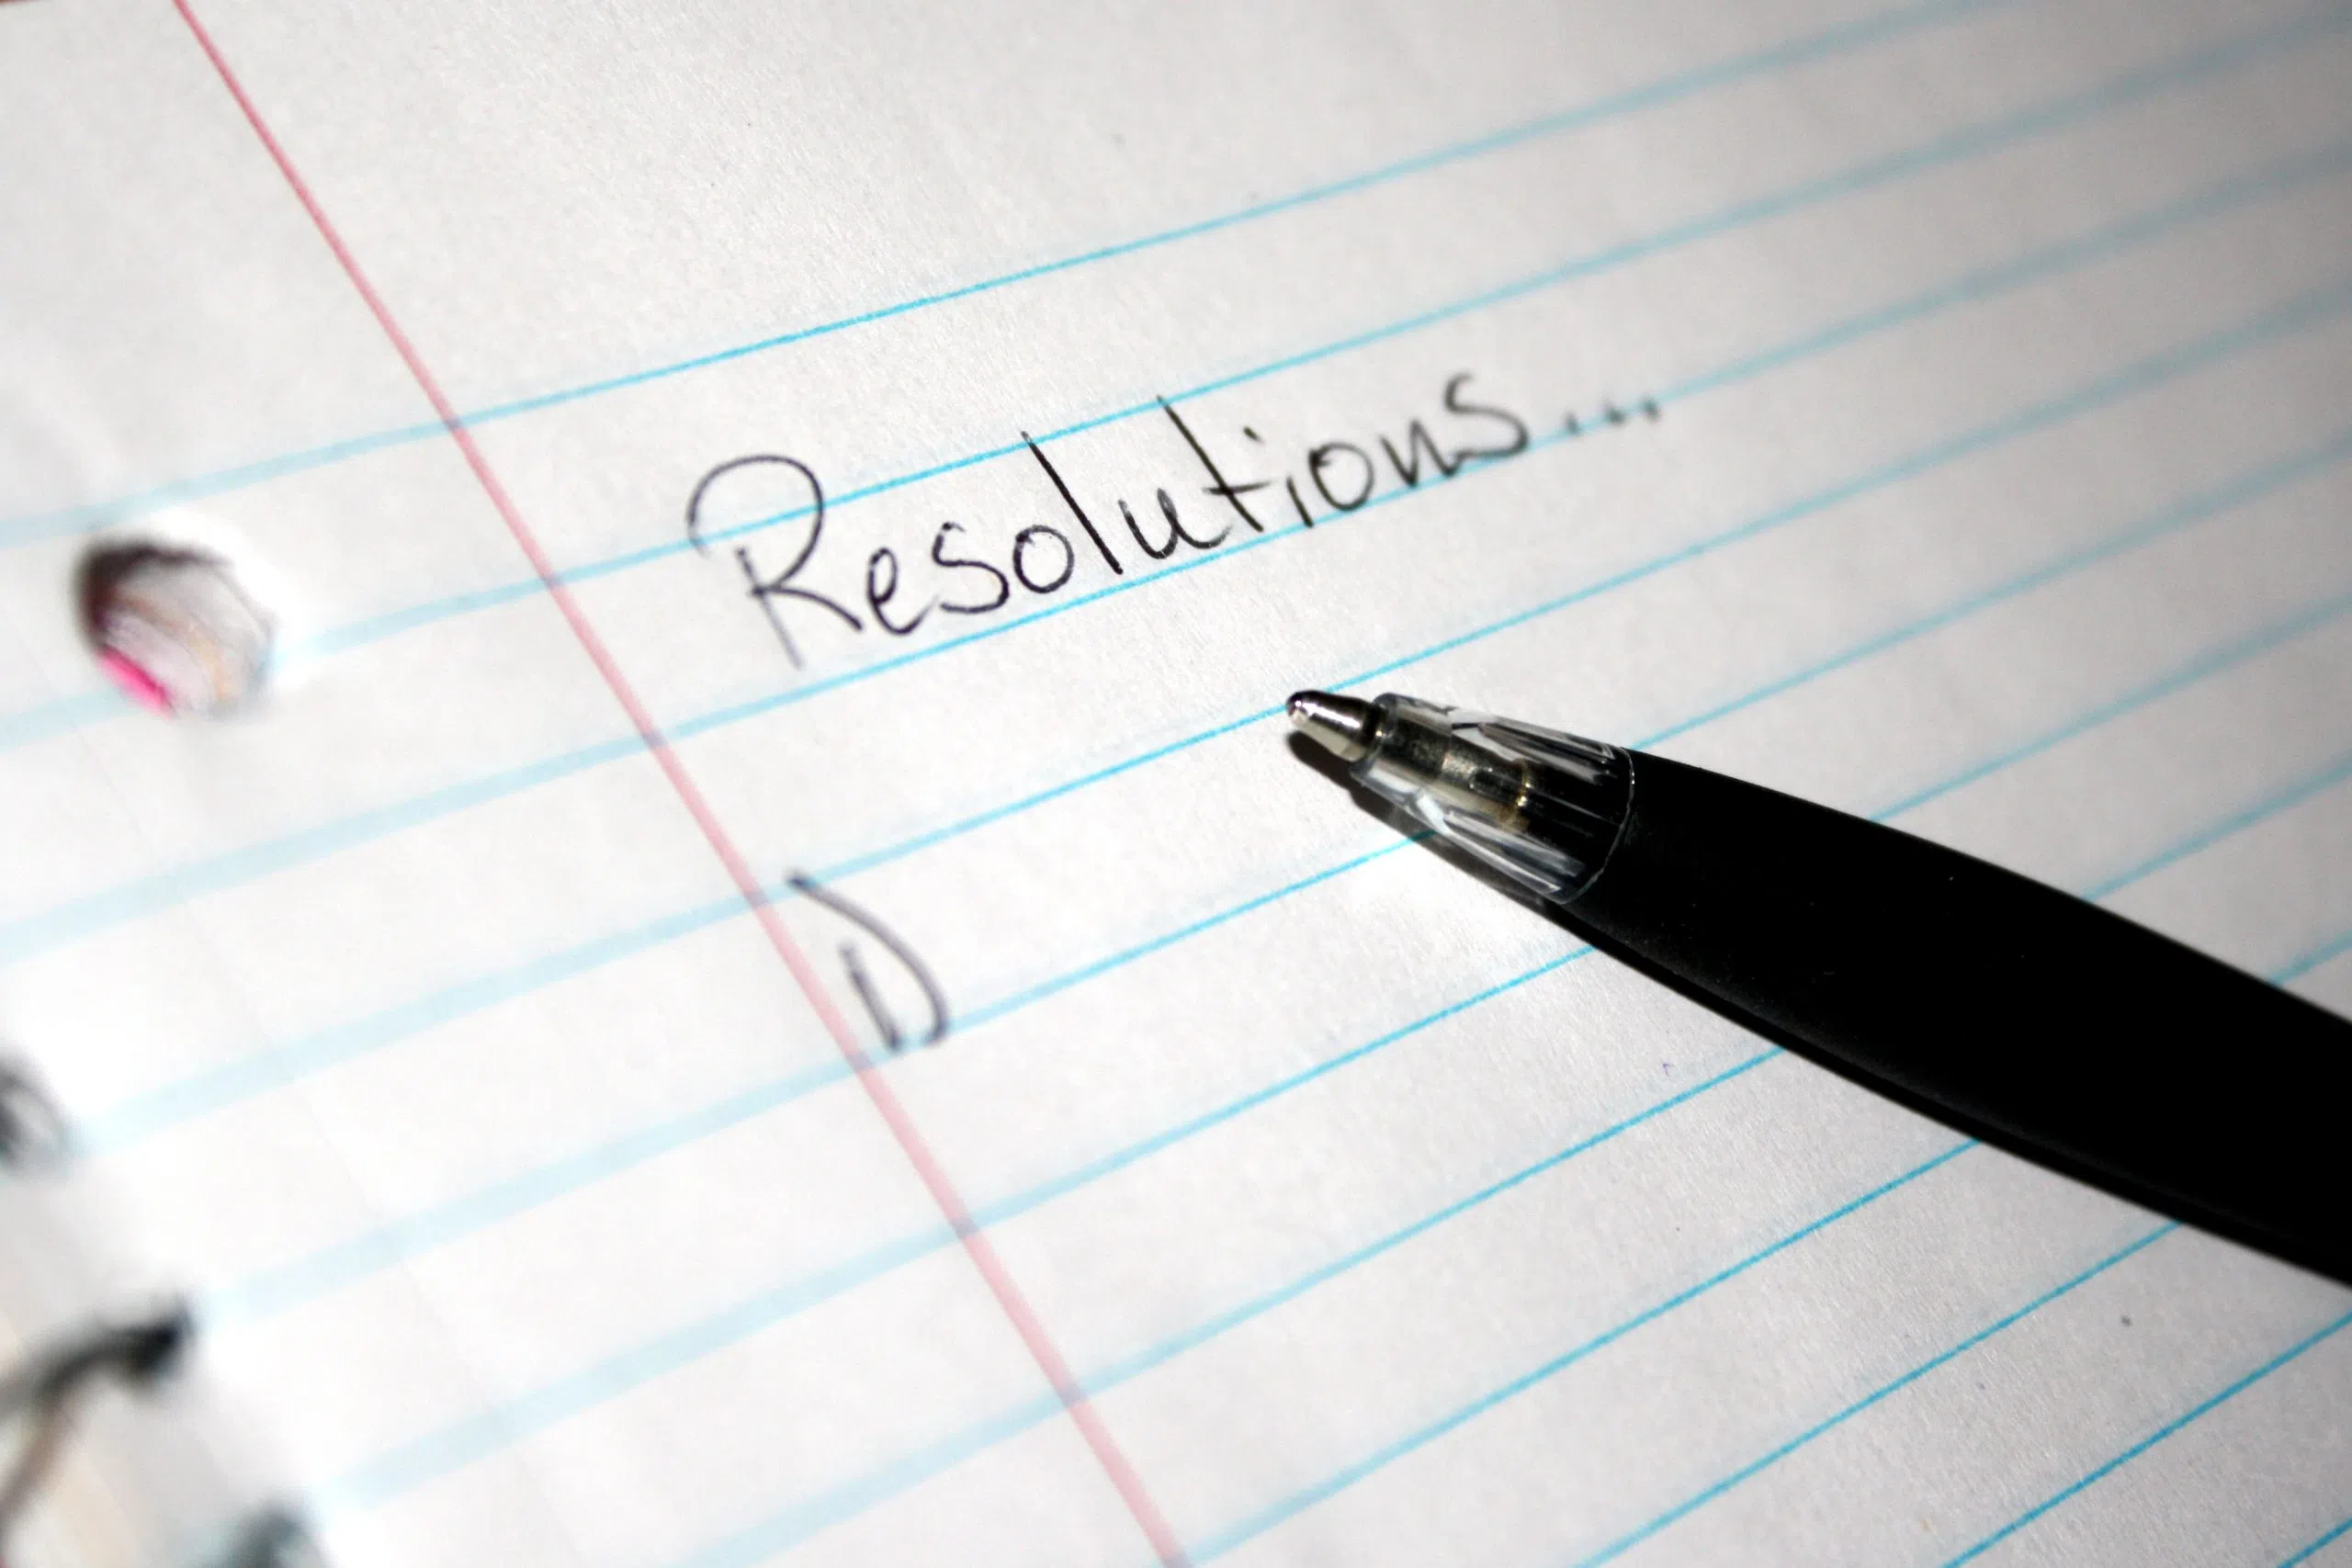 Keeping Resolutions